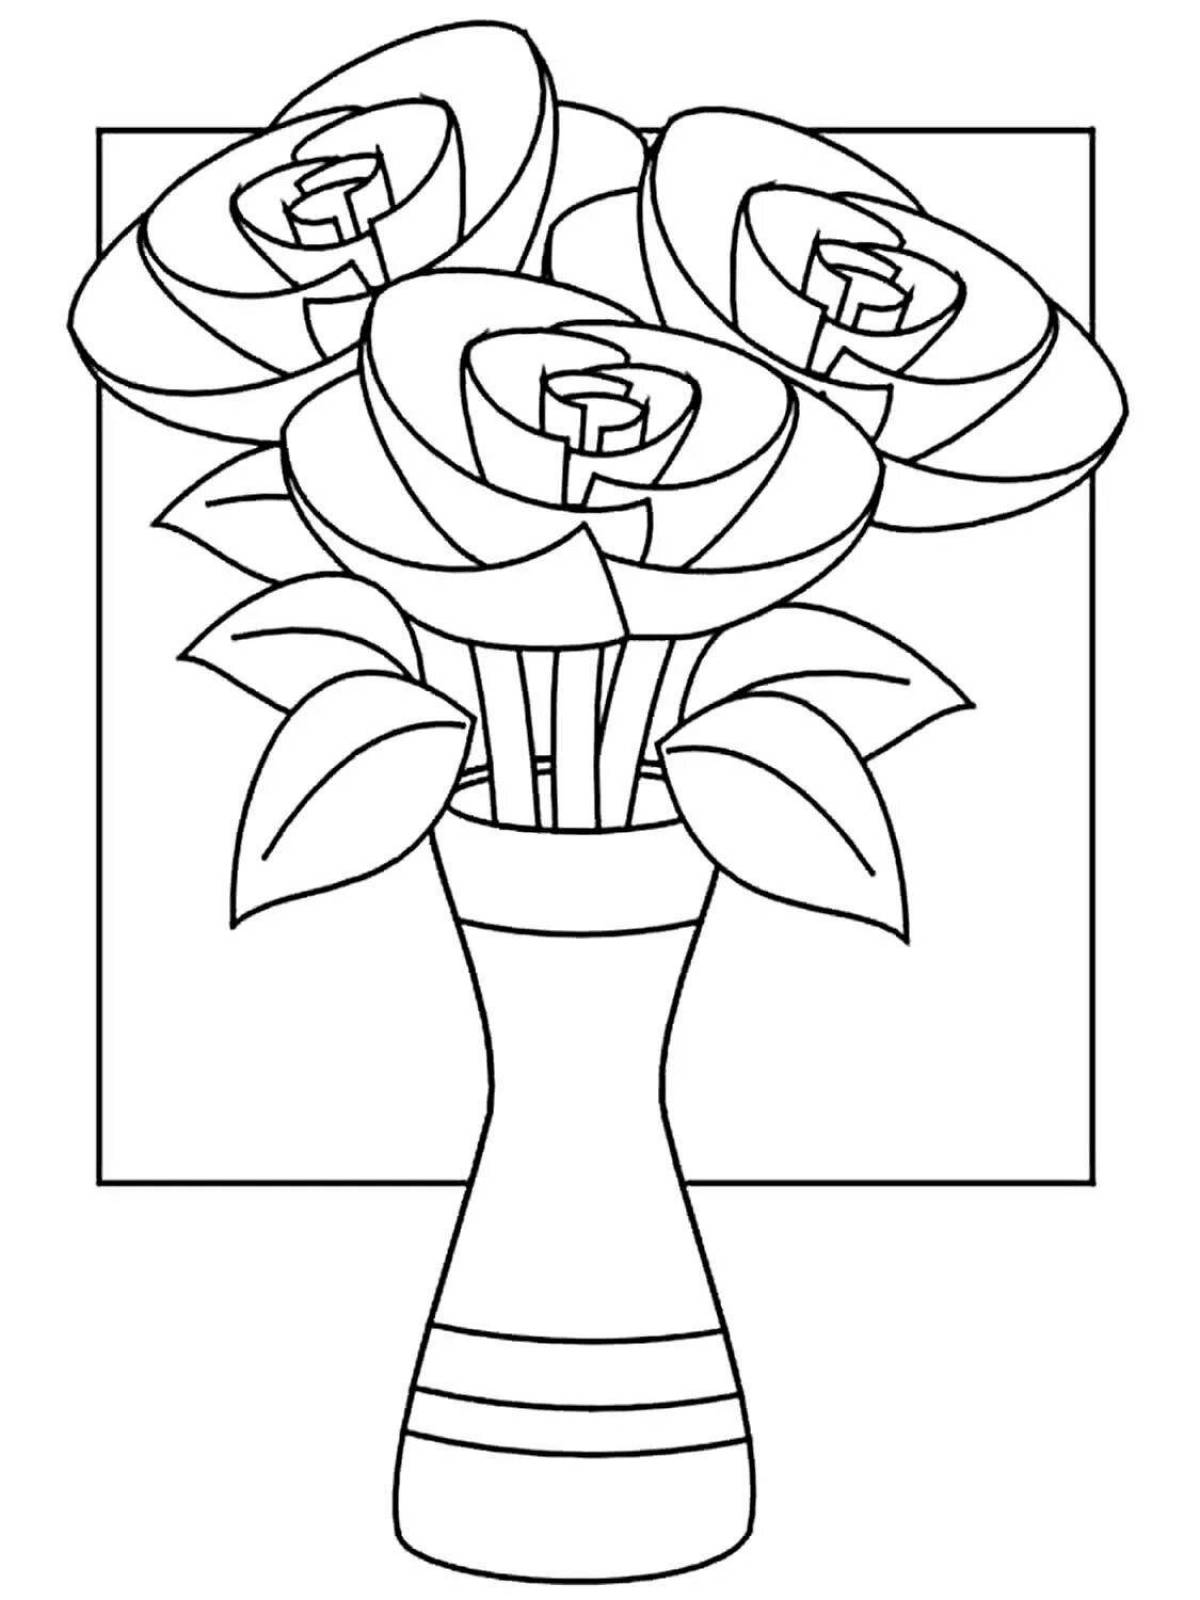 Playful flower vase for children 8-9 years old